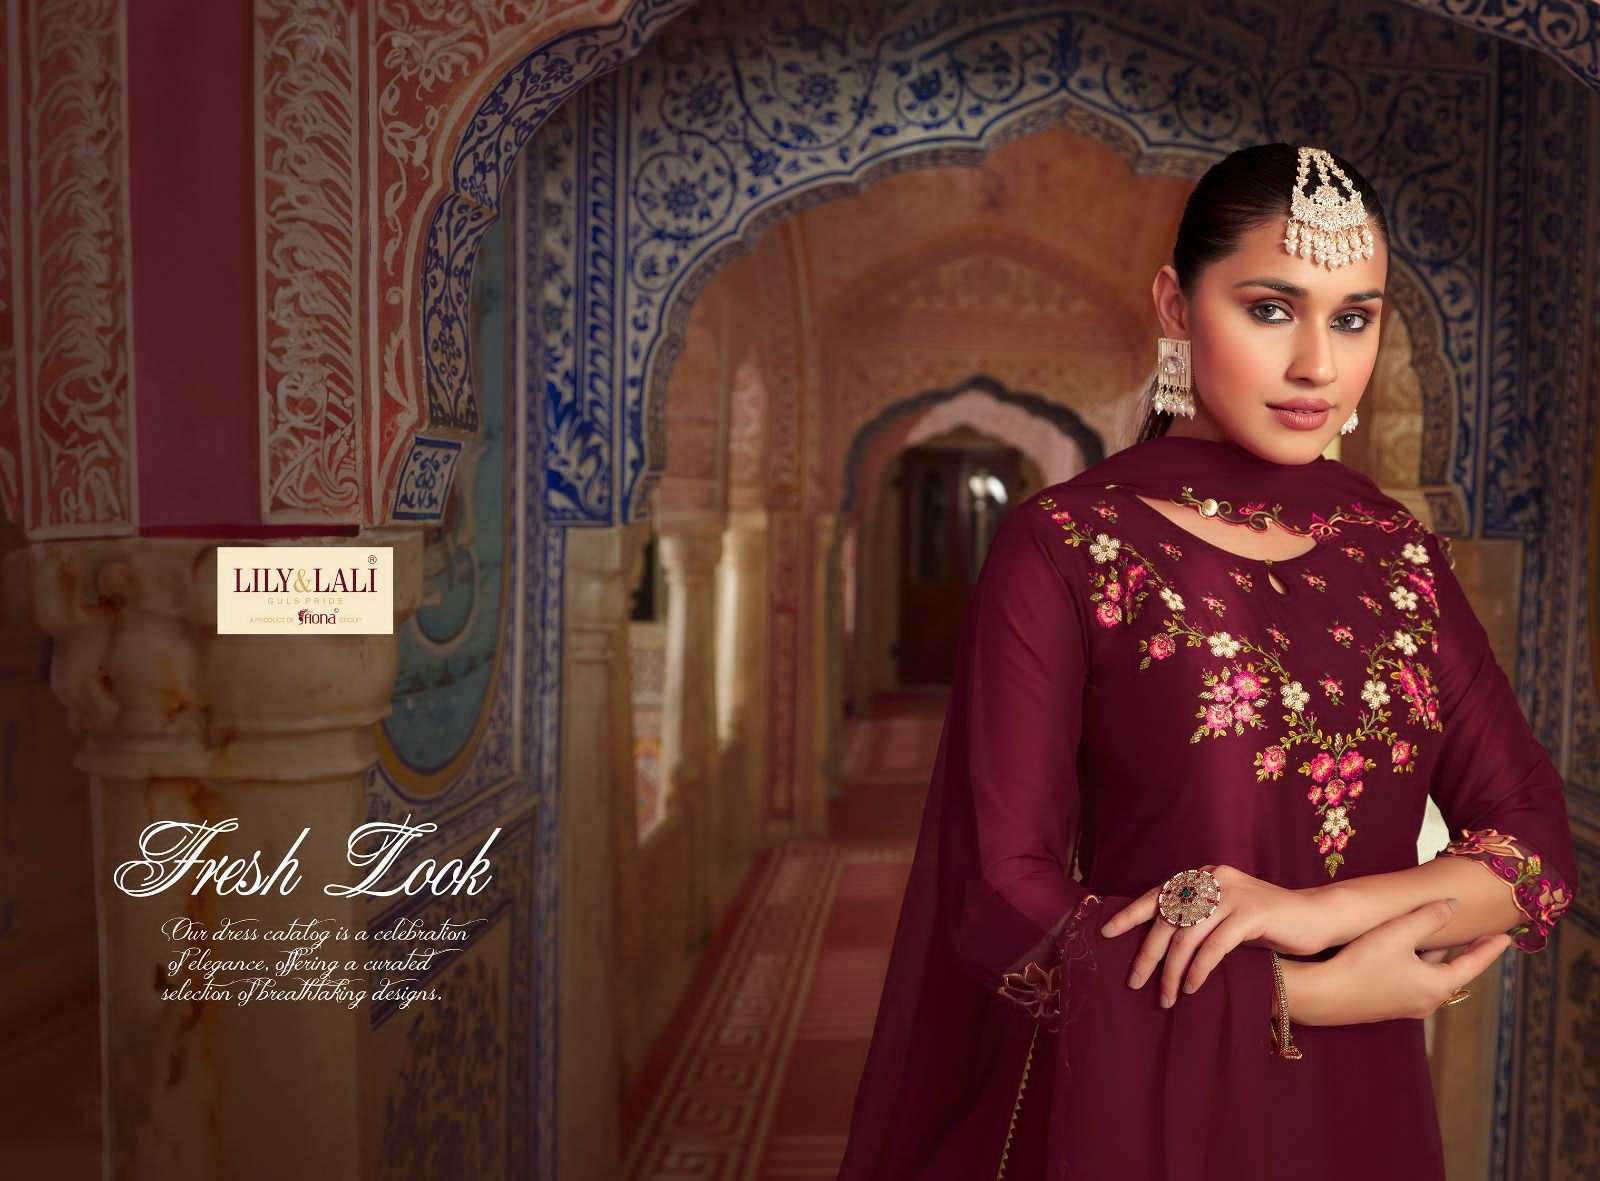 lily&lali mirror elegance 13201-13206 series latest designer salwar kameez wholesaler surat gujarat